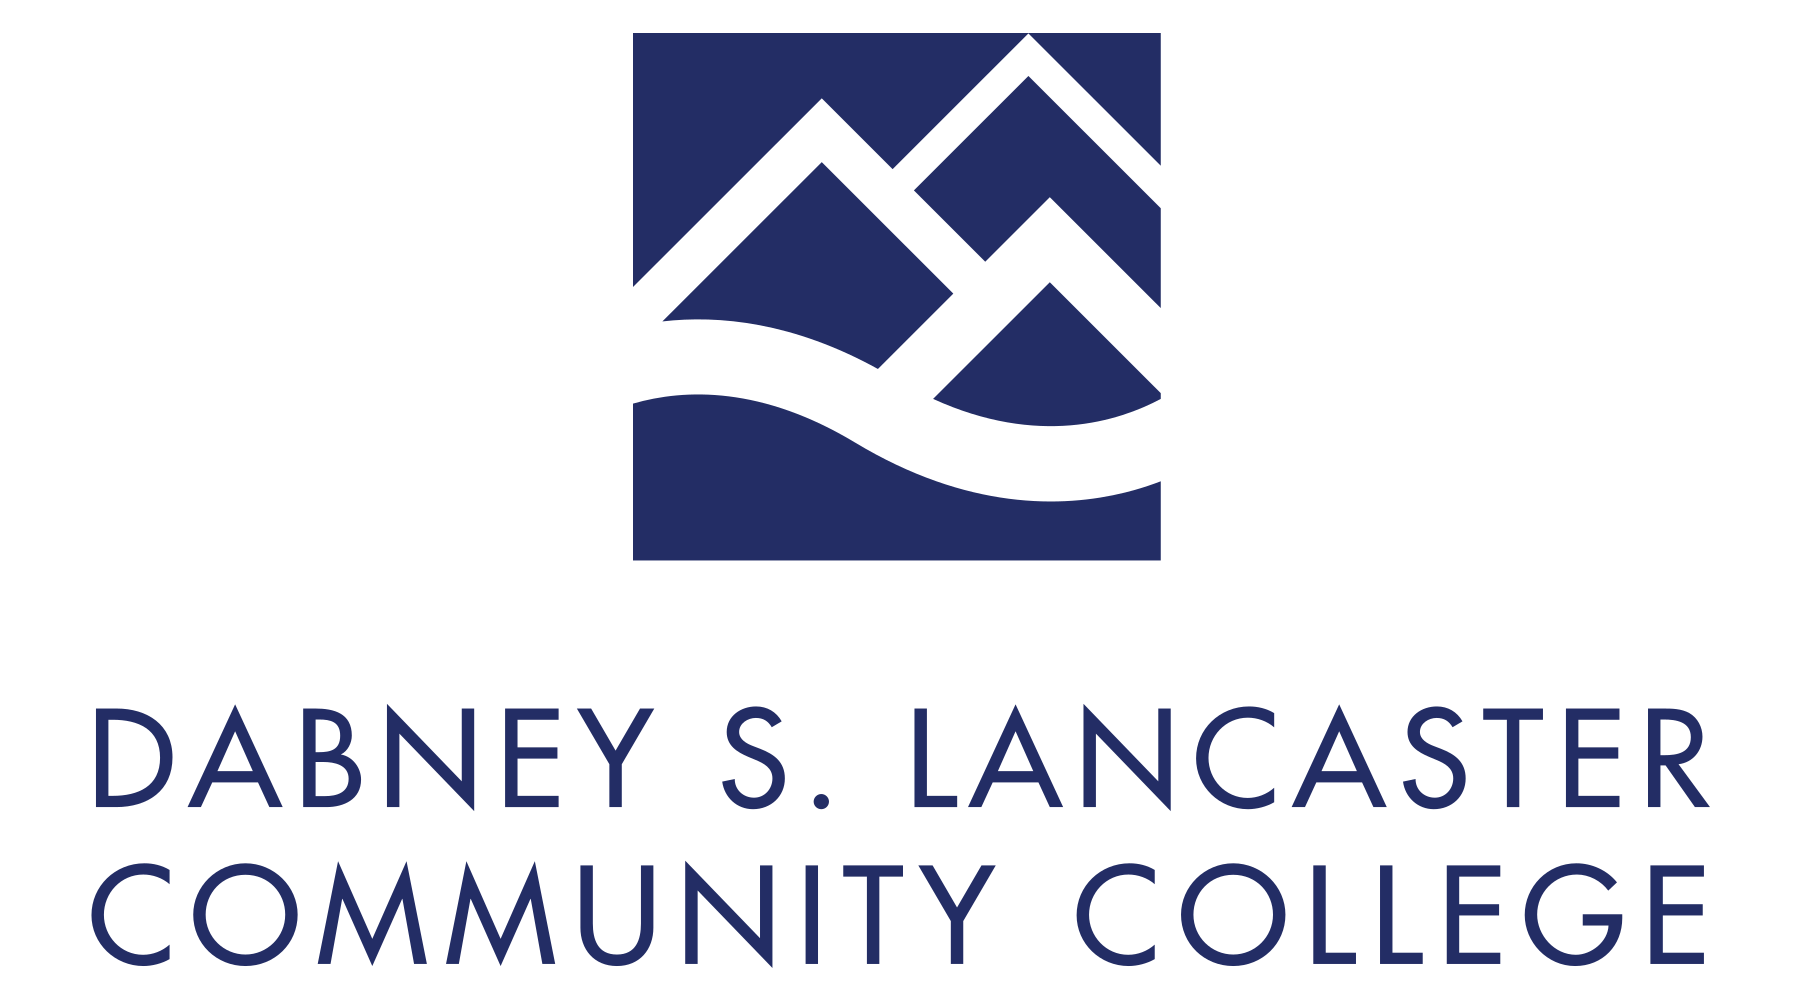 Dabney S. Lancaster Community College FrontEnd Web Developer Online